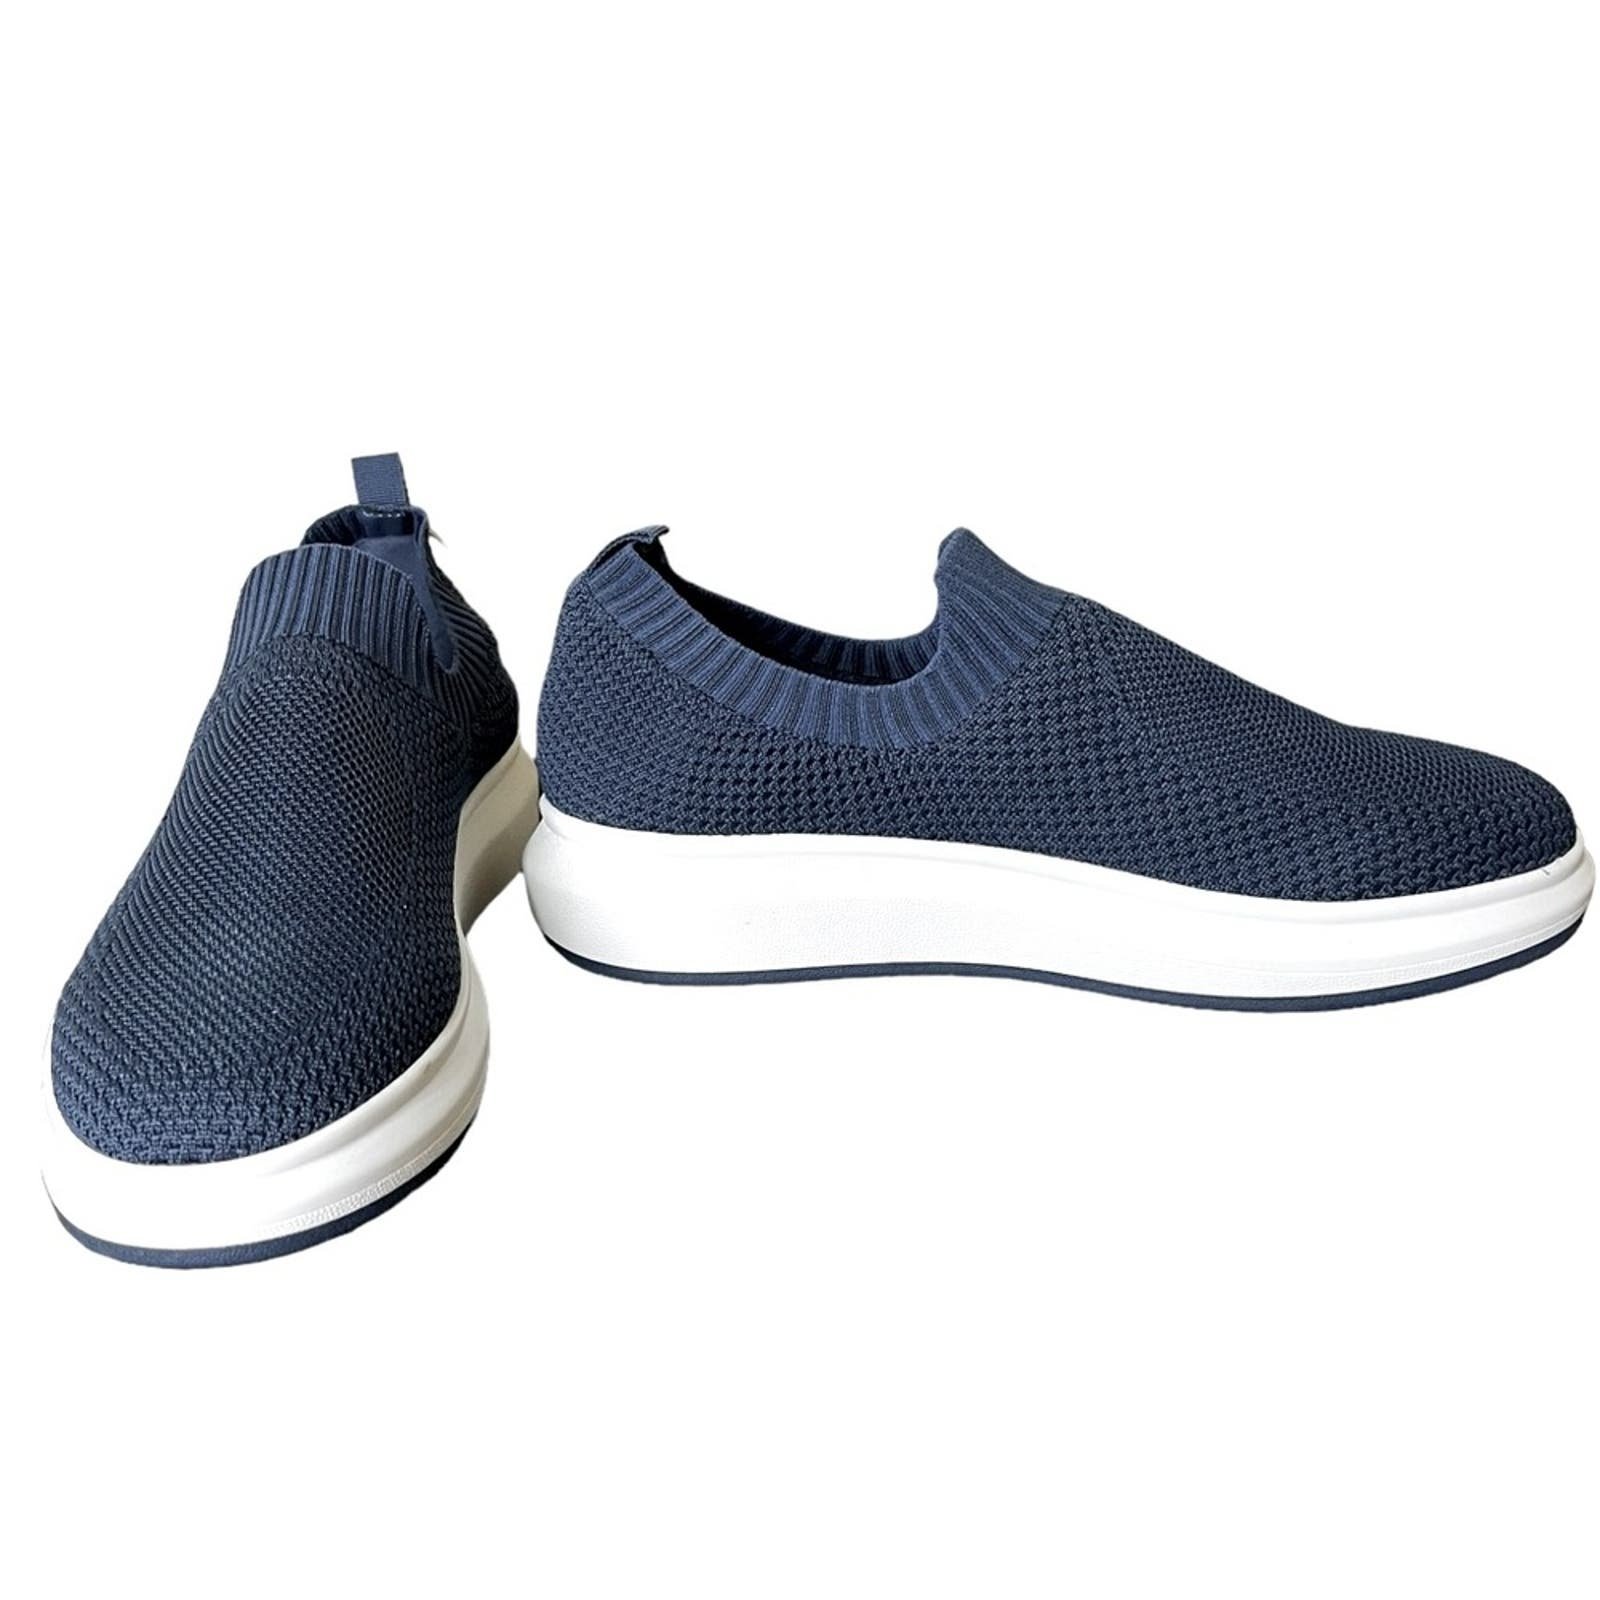 NWT BLONDO Dylan Waterproof Navy Blue Knit Walking Comfort Shoes Sneakers 11 rE3nLXXTE